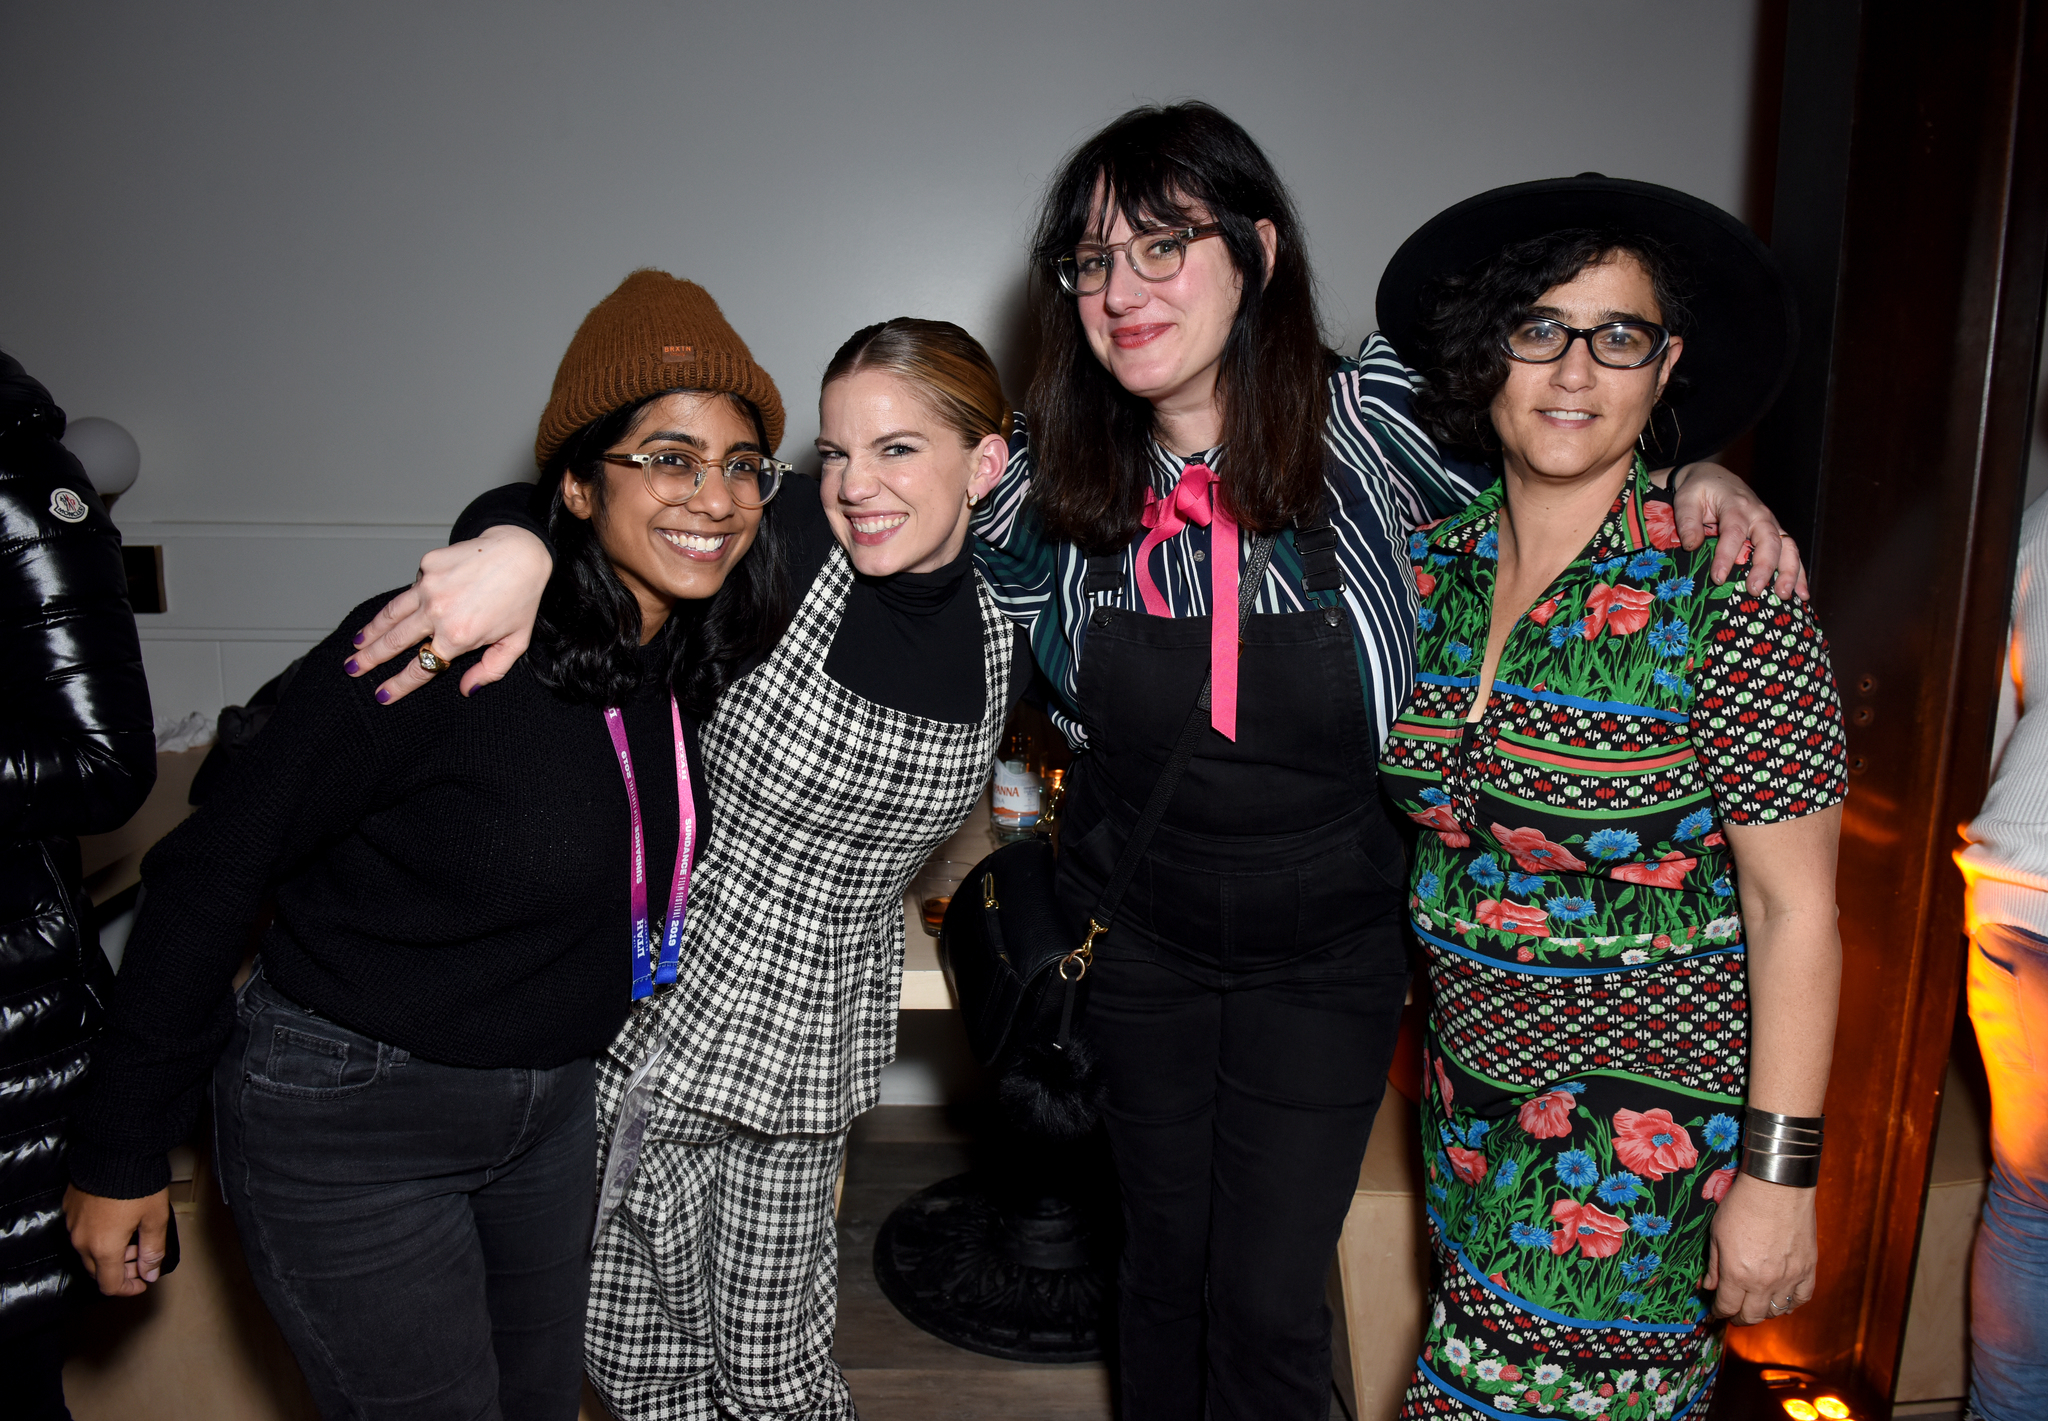 Anna Chlumsky, Yamit Shimonovitz, Mandy Hoffman, and Minhal Baig at an event for Hala (2019)